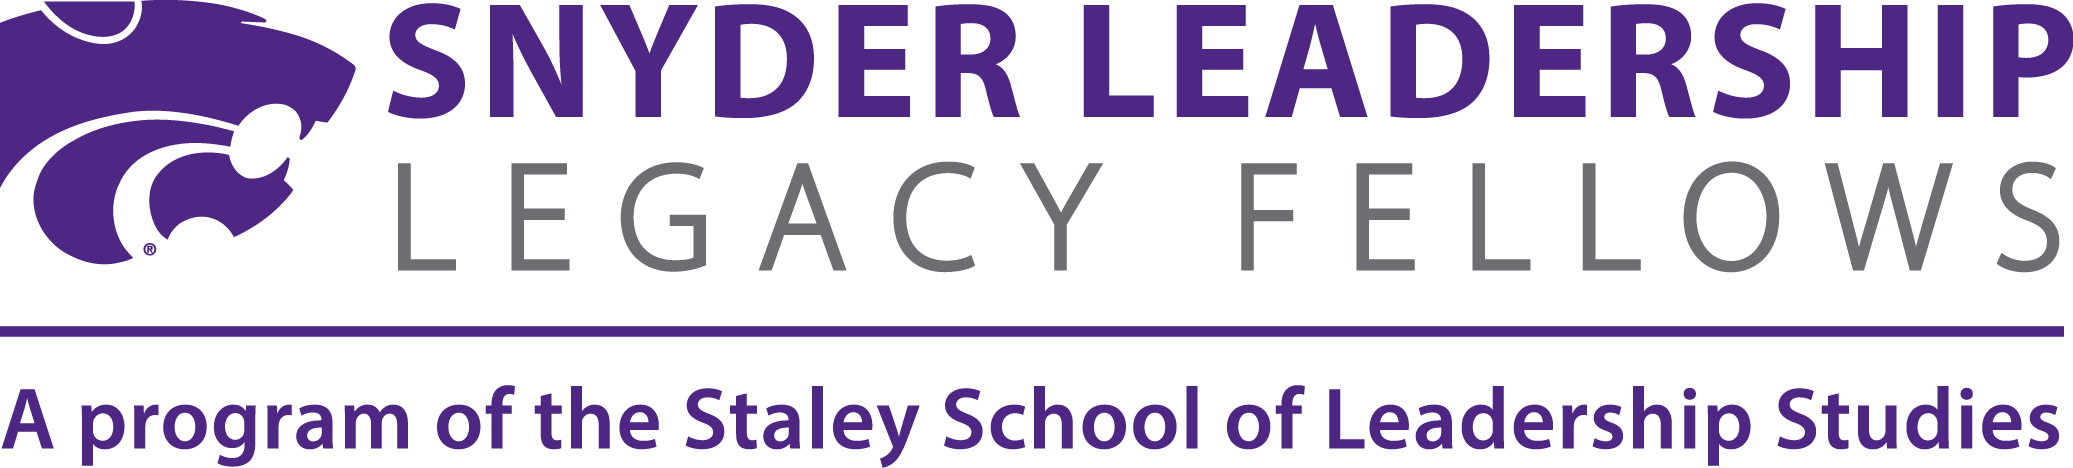 Snyder Leadership Legacy Fellows Logo